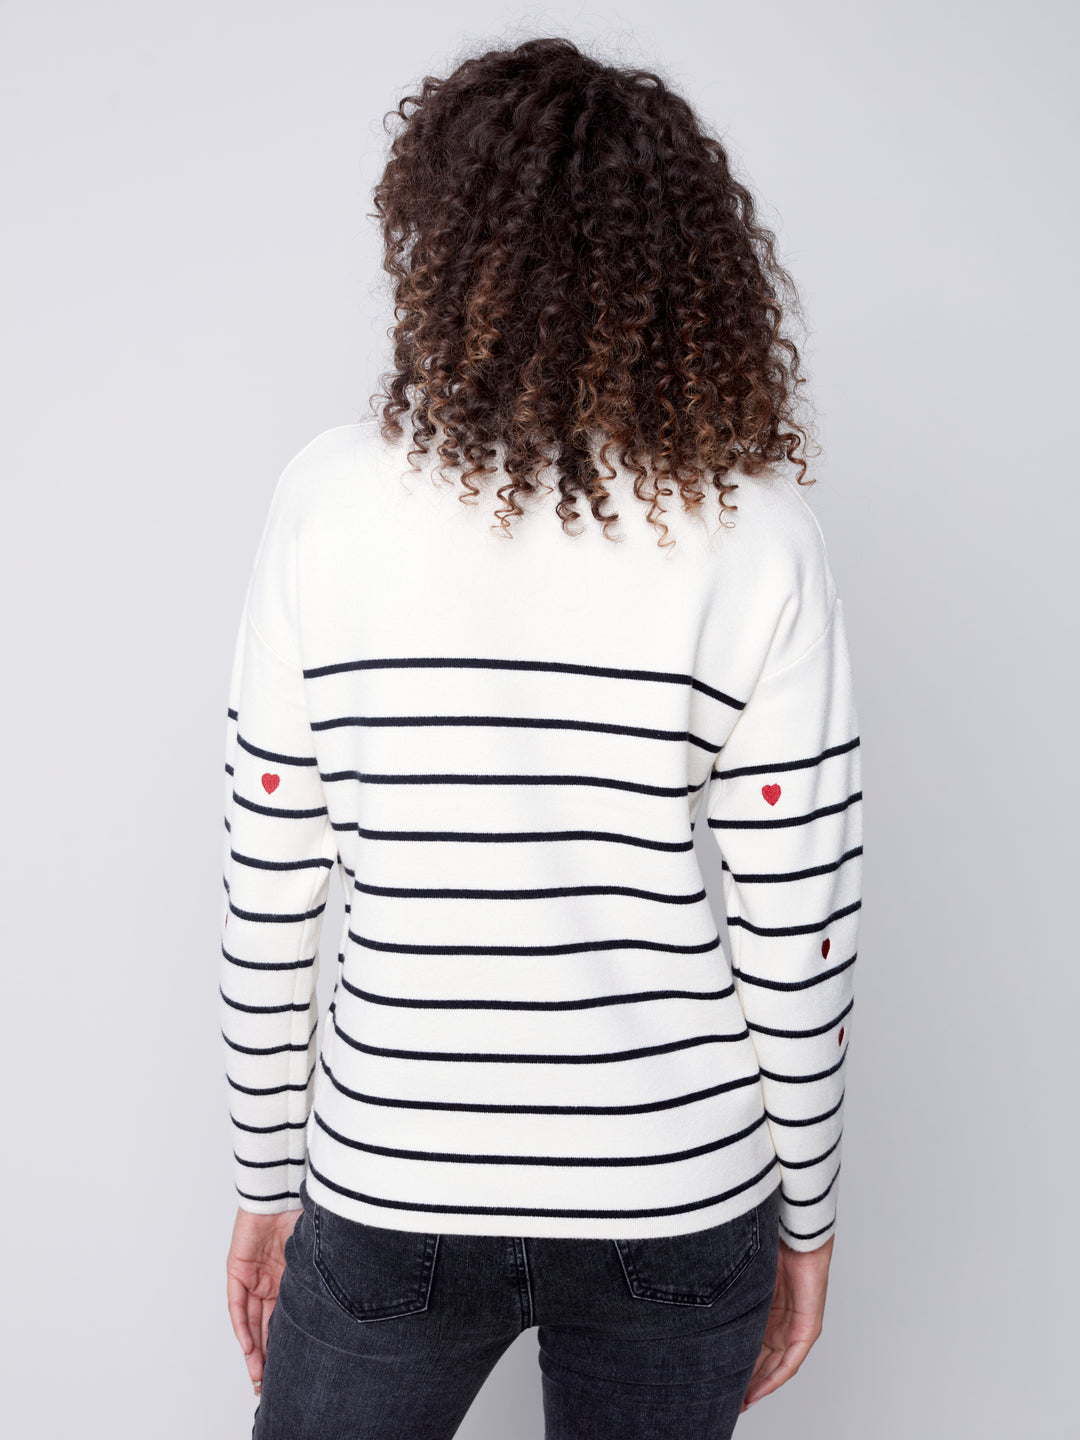 Jacquard Knit Striped Long Sleeve Top